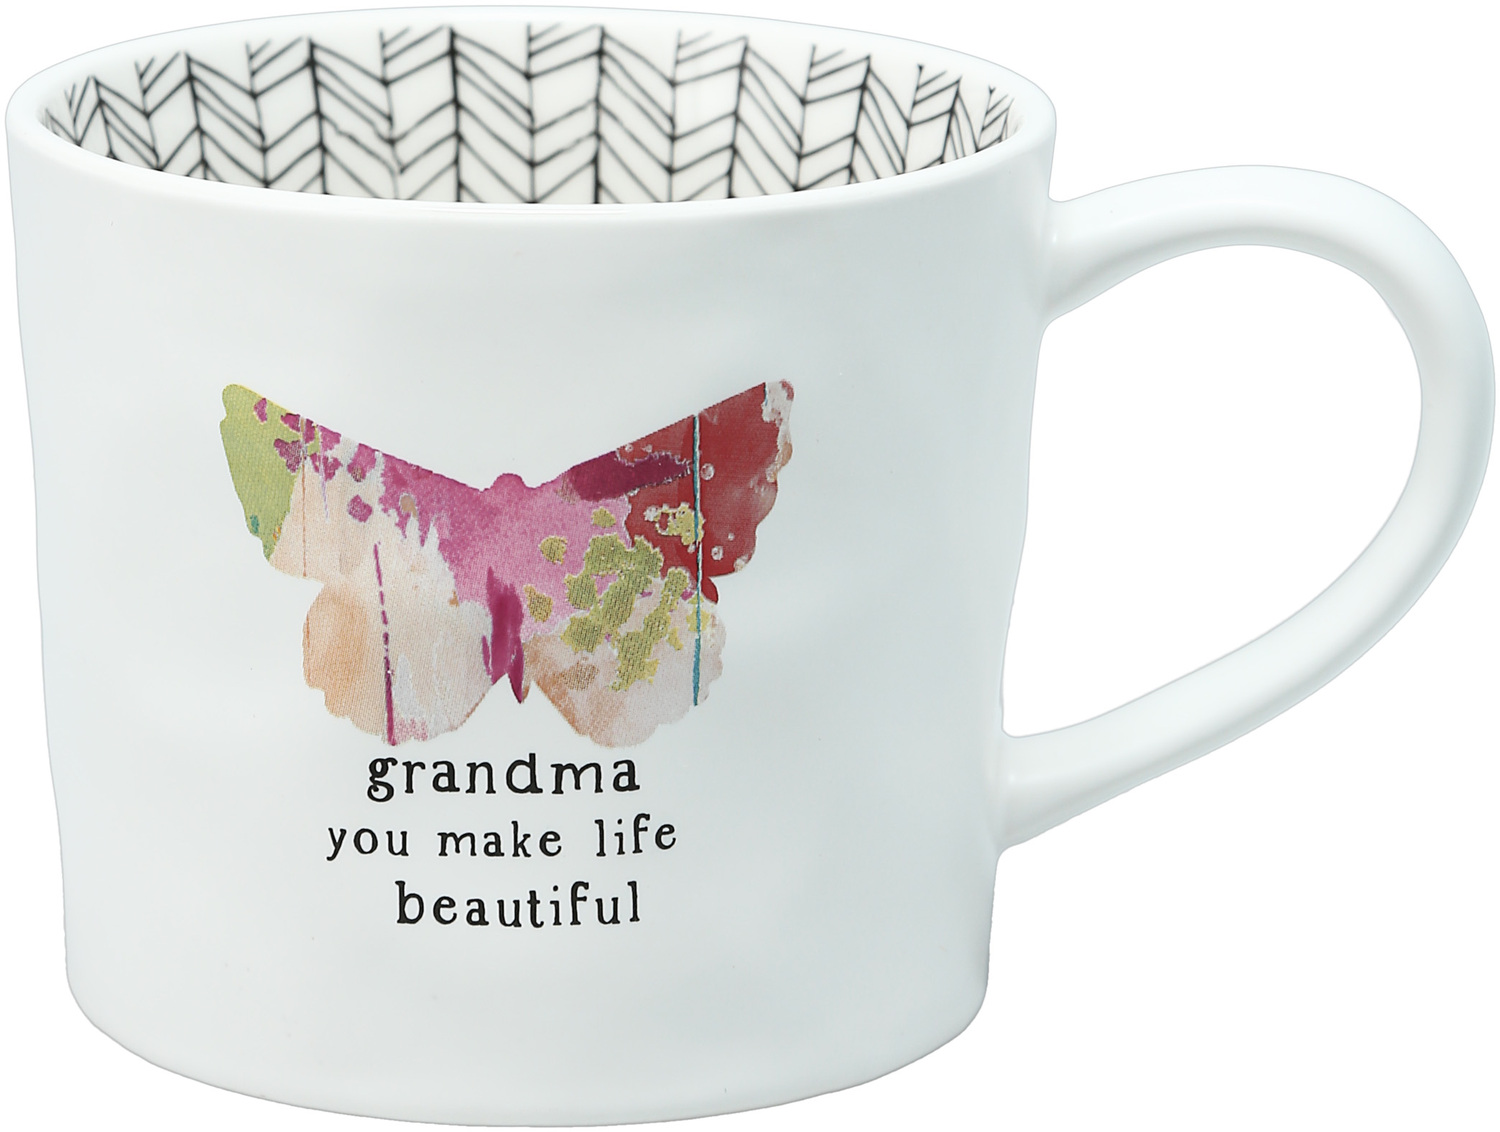 Grandma by Celebrating You - Grandma - 16 oz Mug